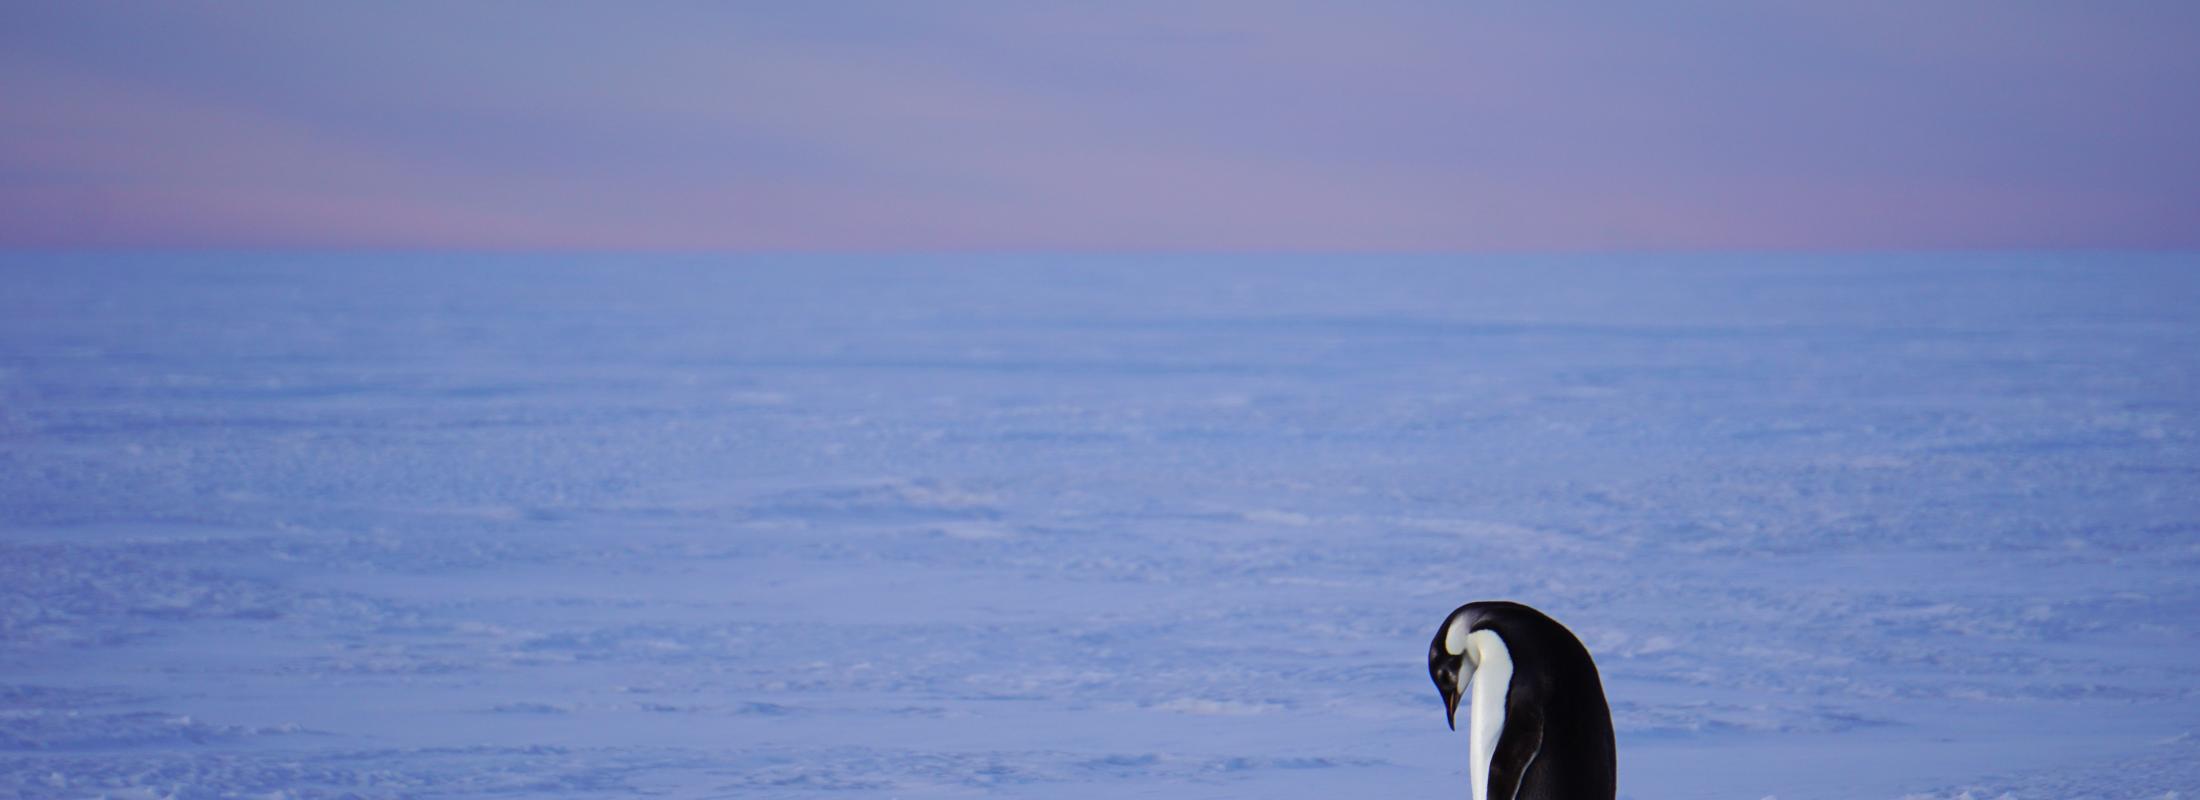 Emperor Penguin by Ian Geraghty